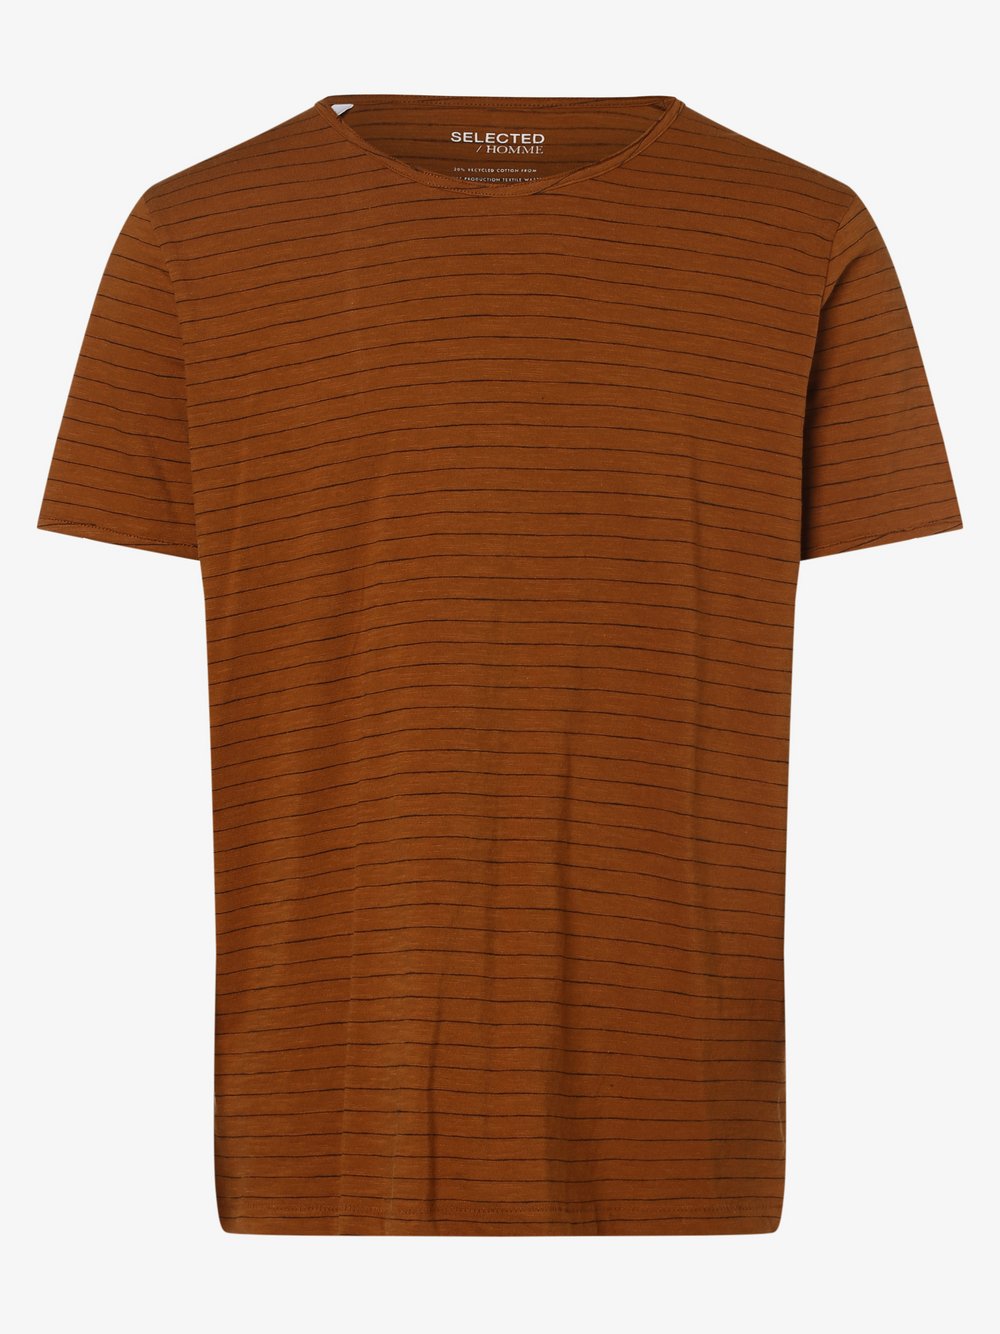 Selected - T-shirt męski – SLHMorgan, brązowy